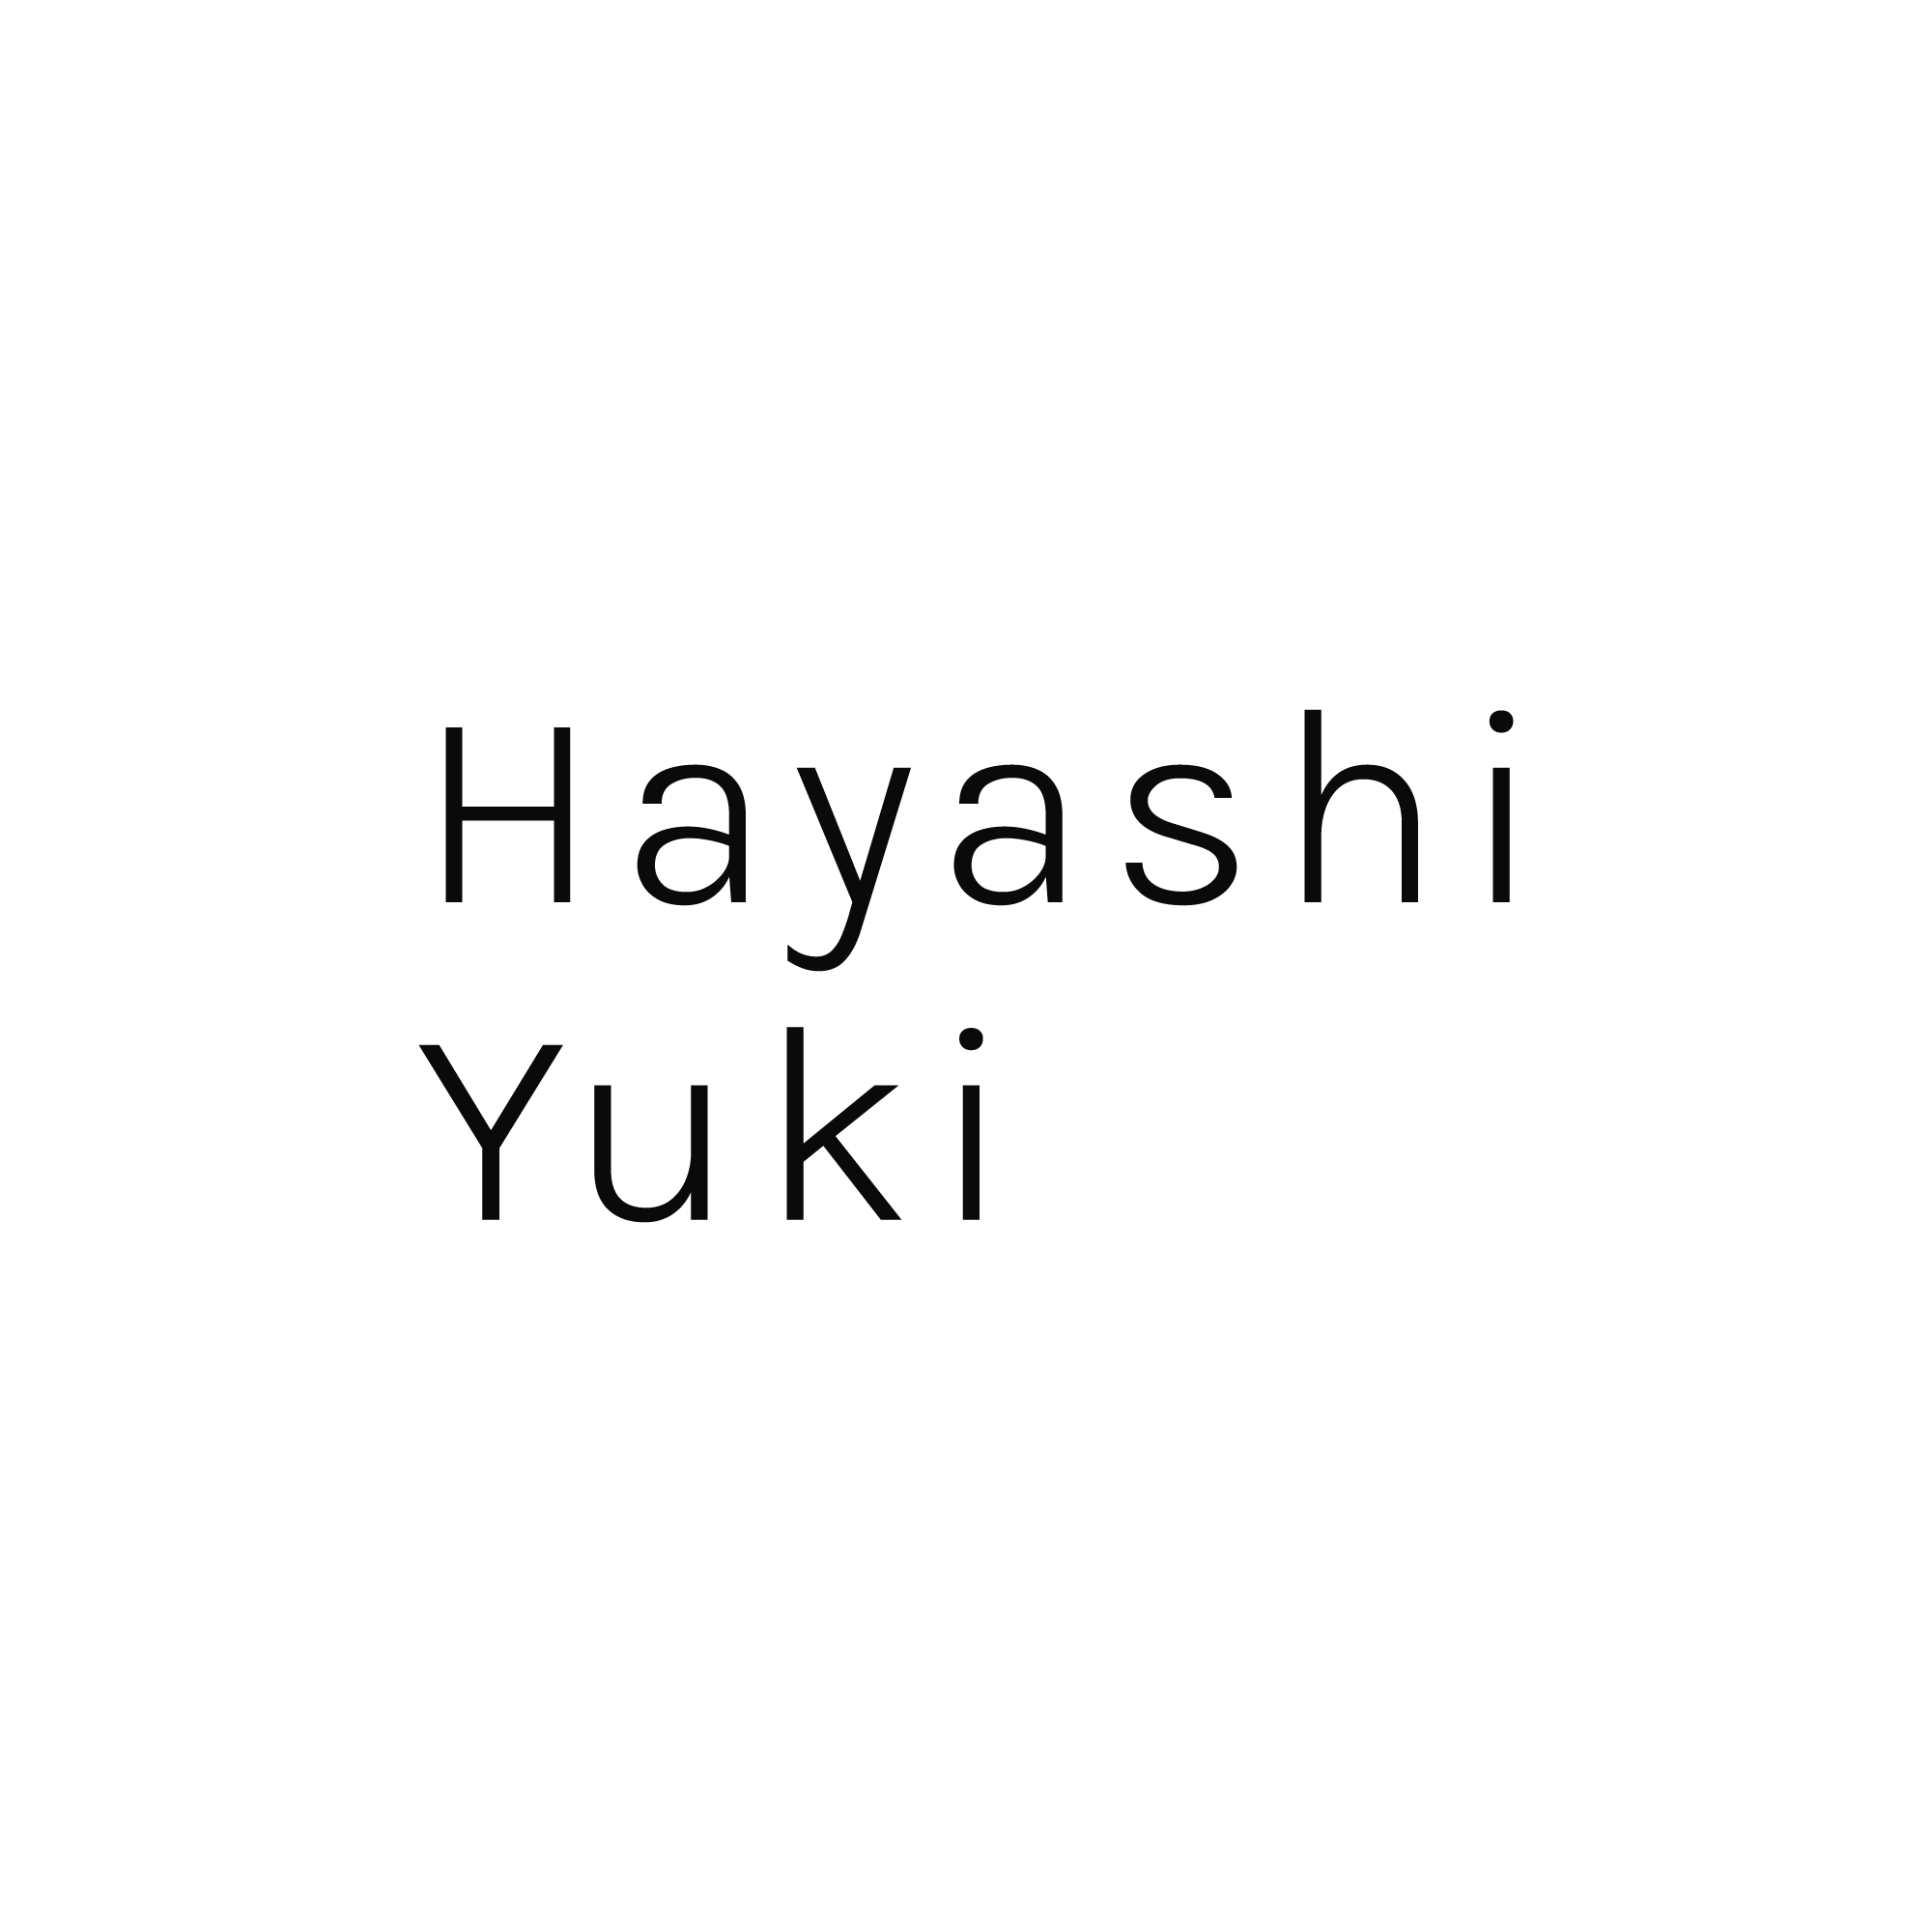 Hayashi Yuki Visual Arts